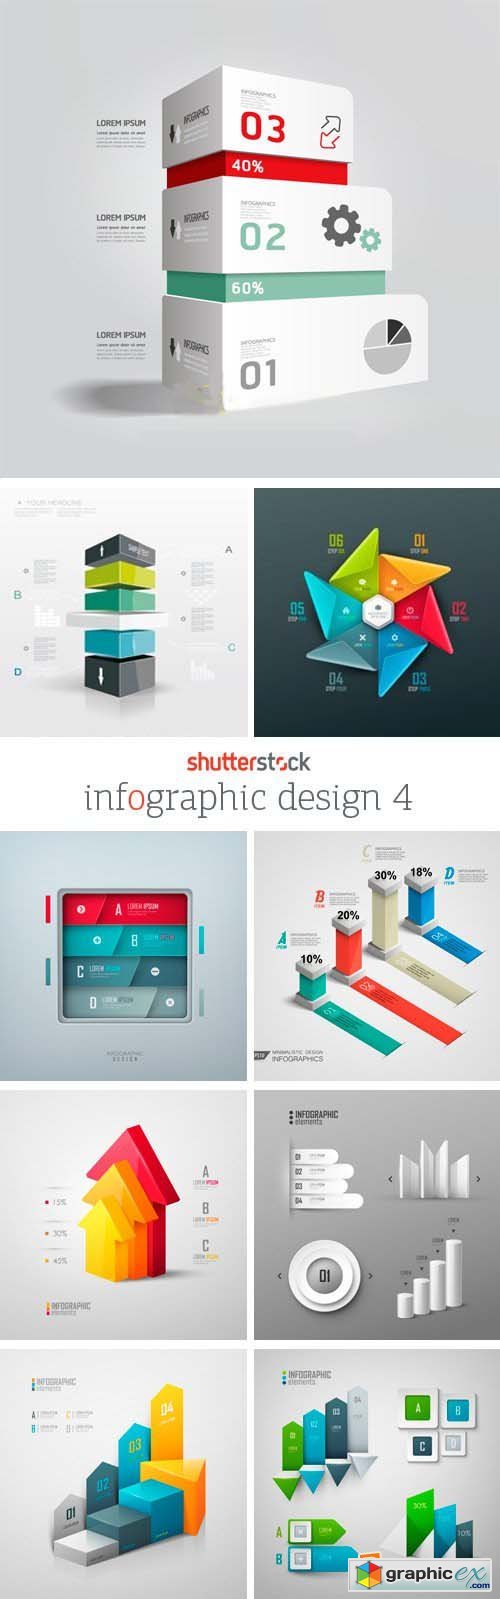 Amazing SS - Infographic Design 4, 25xEPS